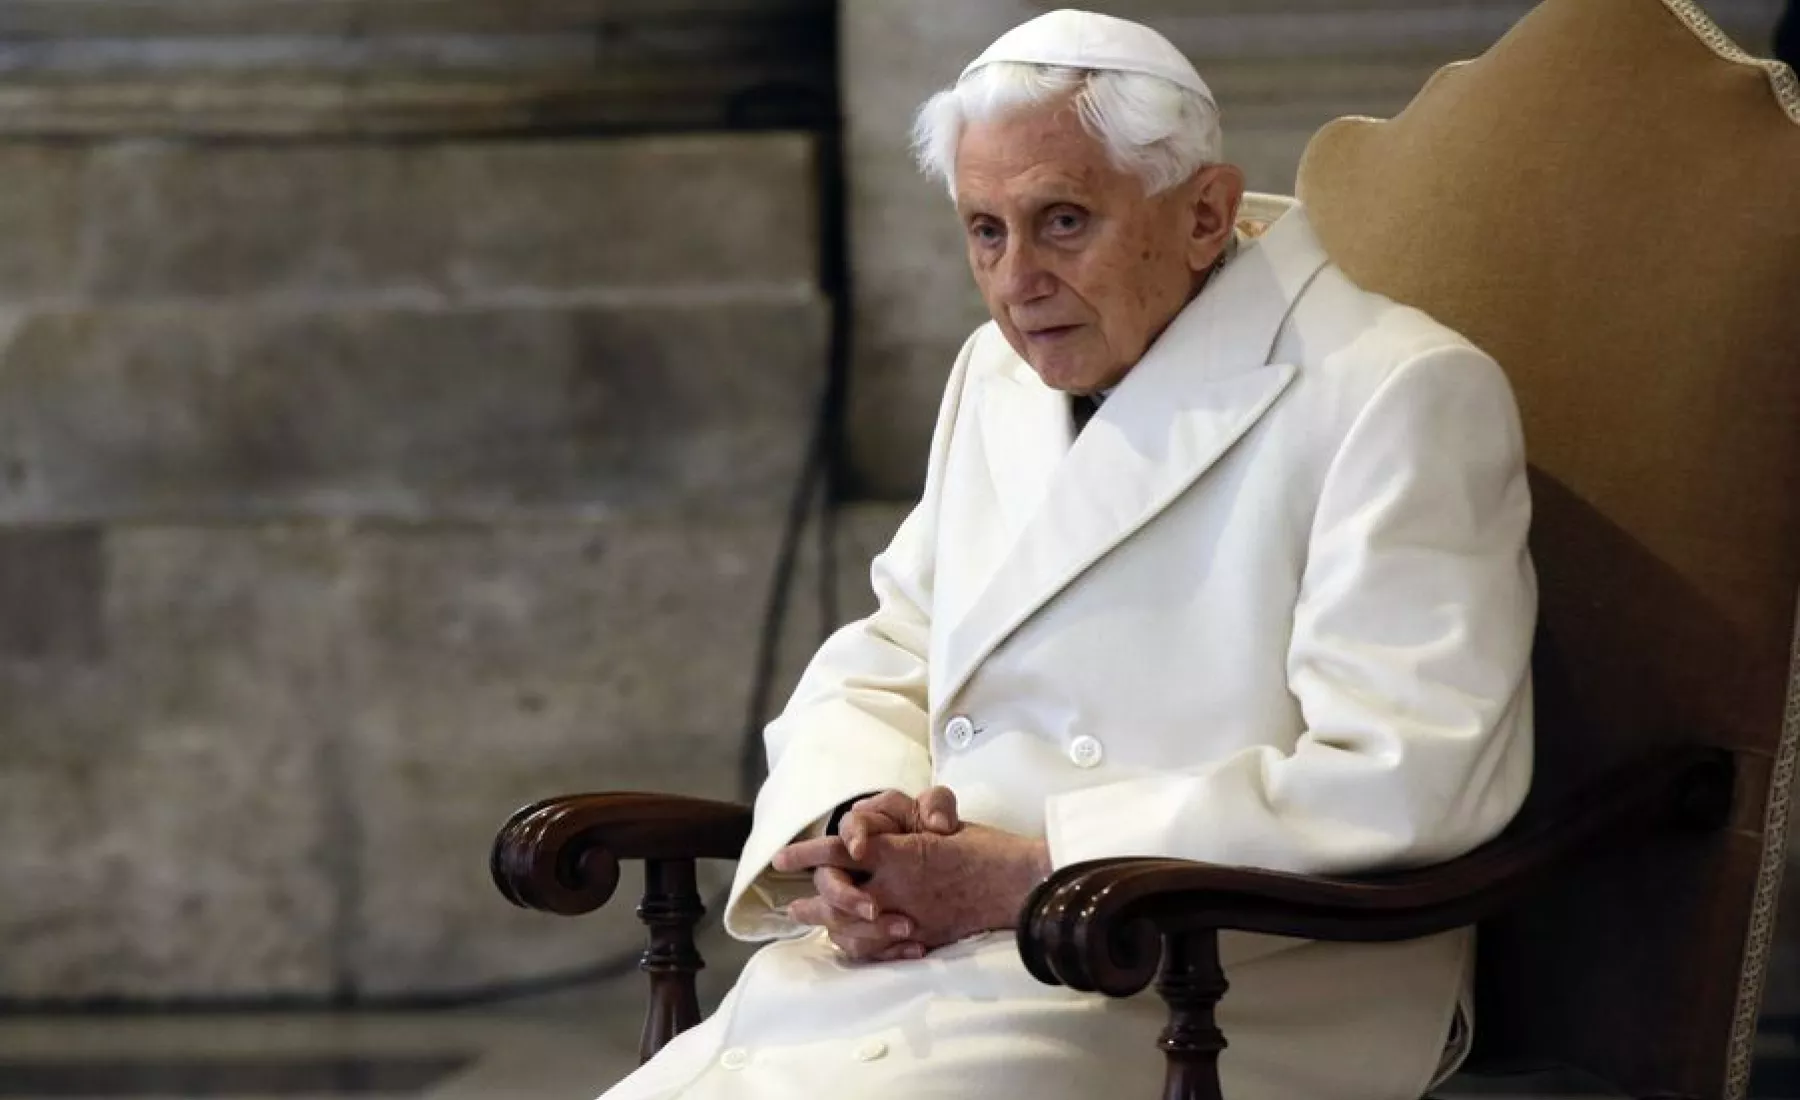 Papst Benedikt XVI